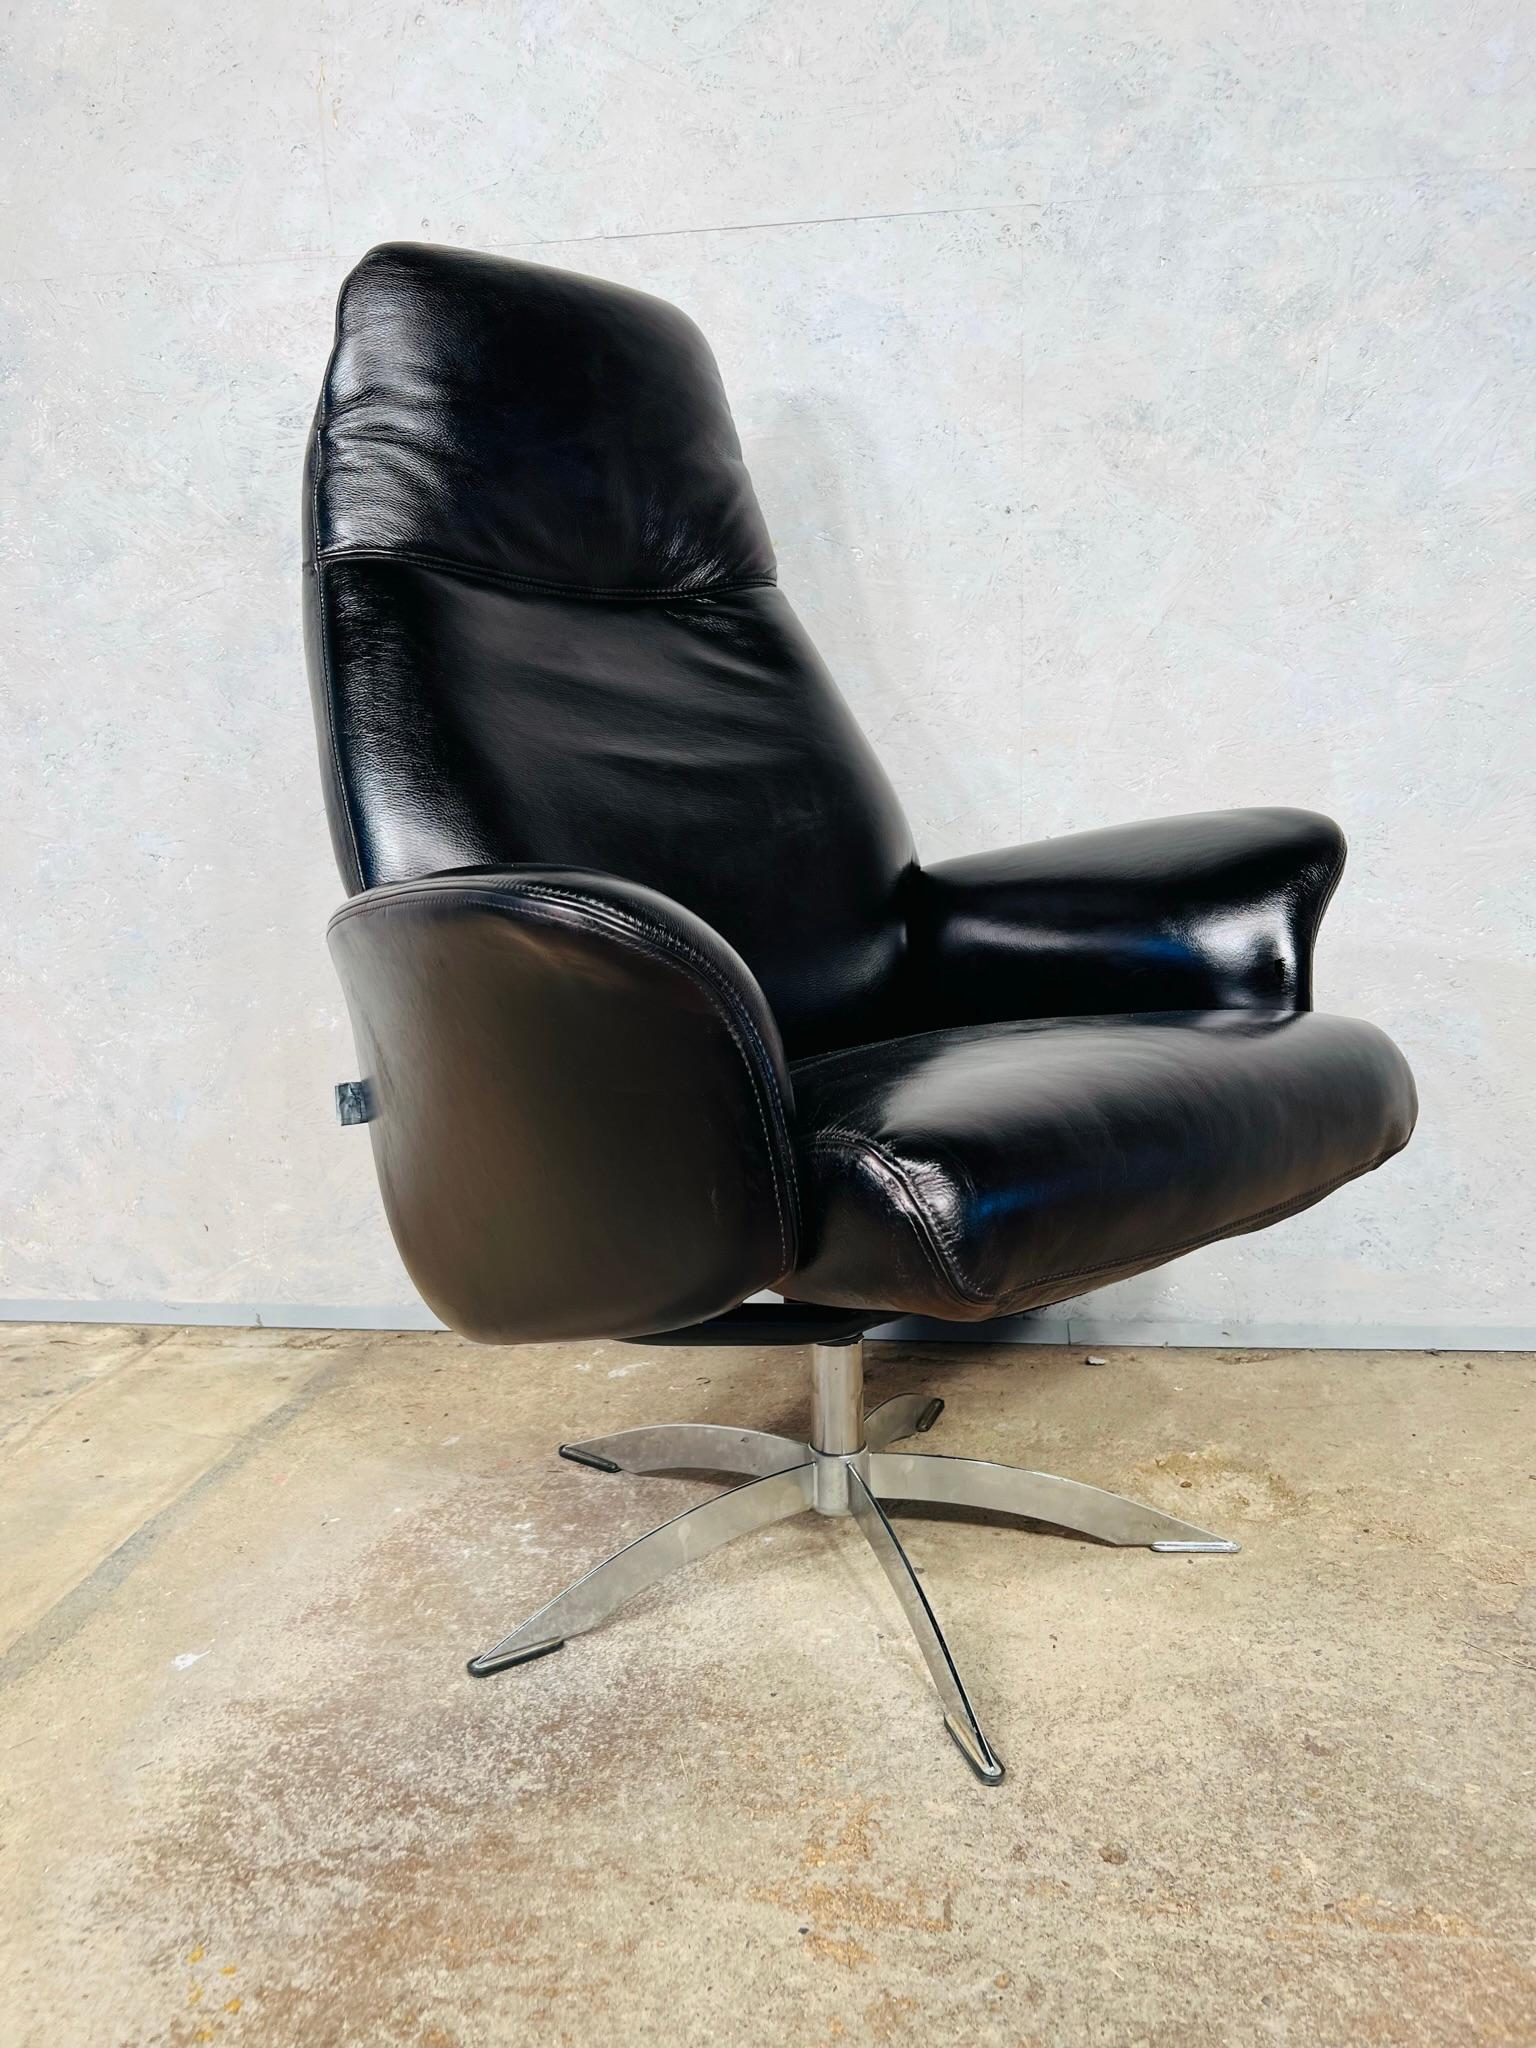 Vintage Danish Swivel Black Leather Desk Chair By Hjort Knudsen #589 1